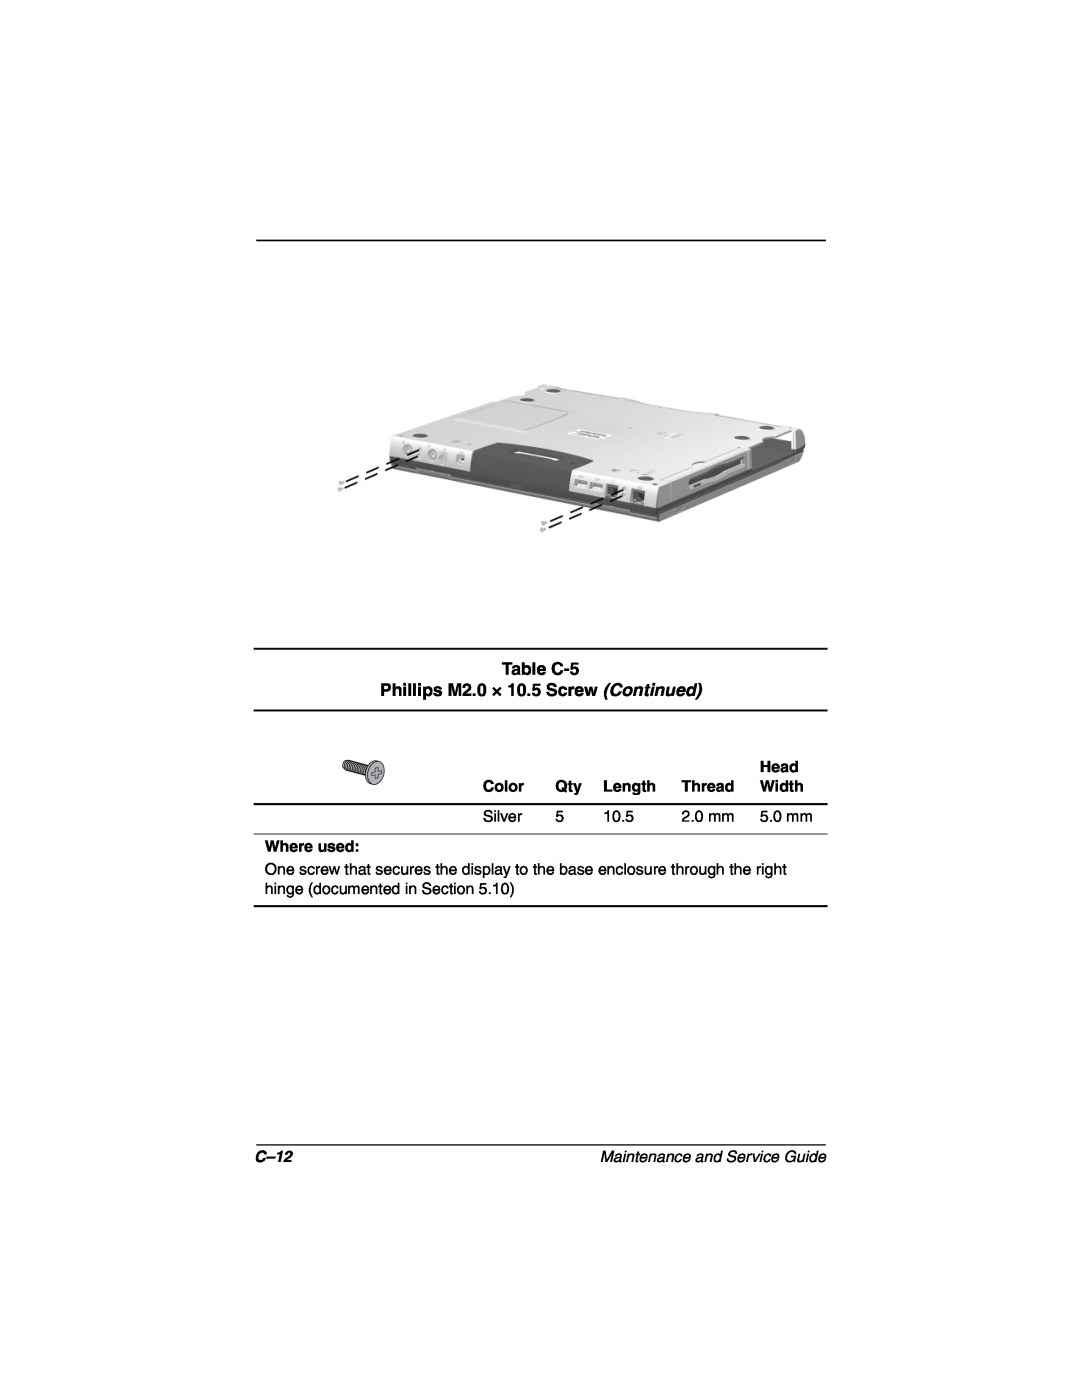 Compaq N160 manual Table C-5 Phillips M2.0 × 10.5 Screw Continued, C-12 